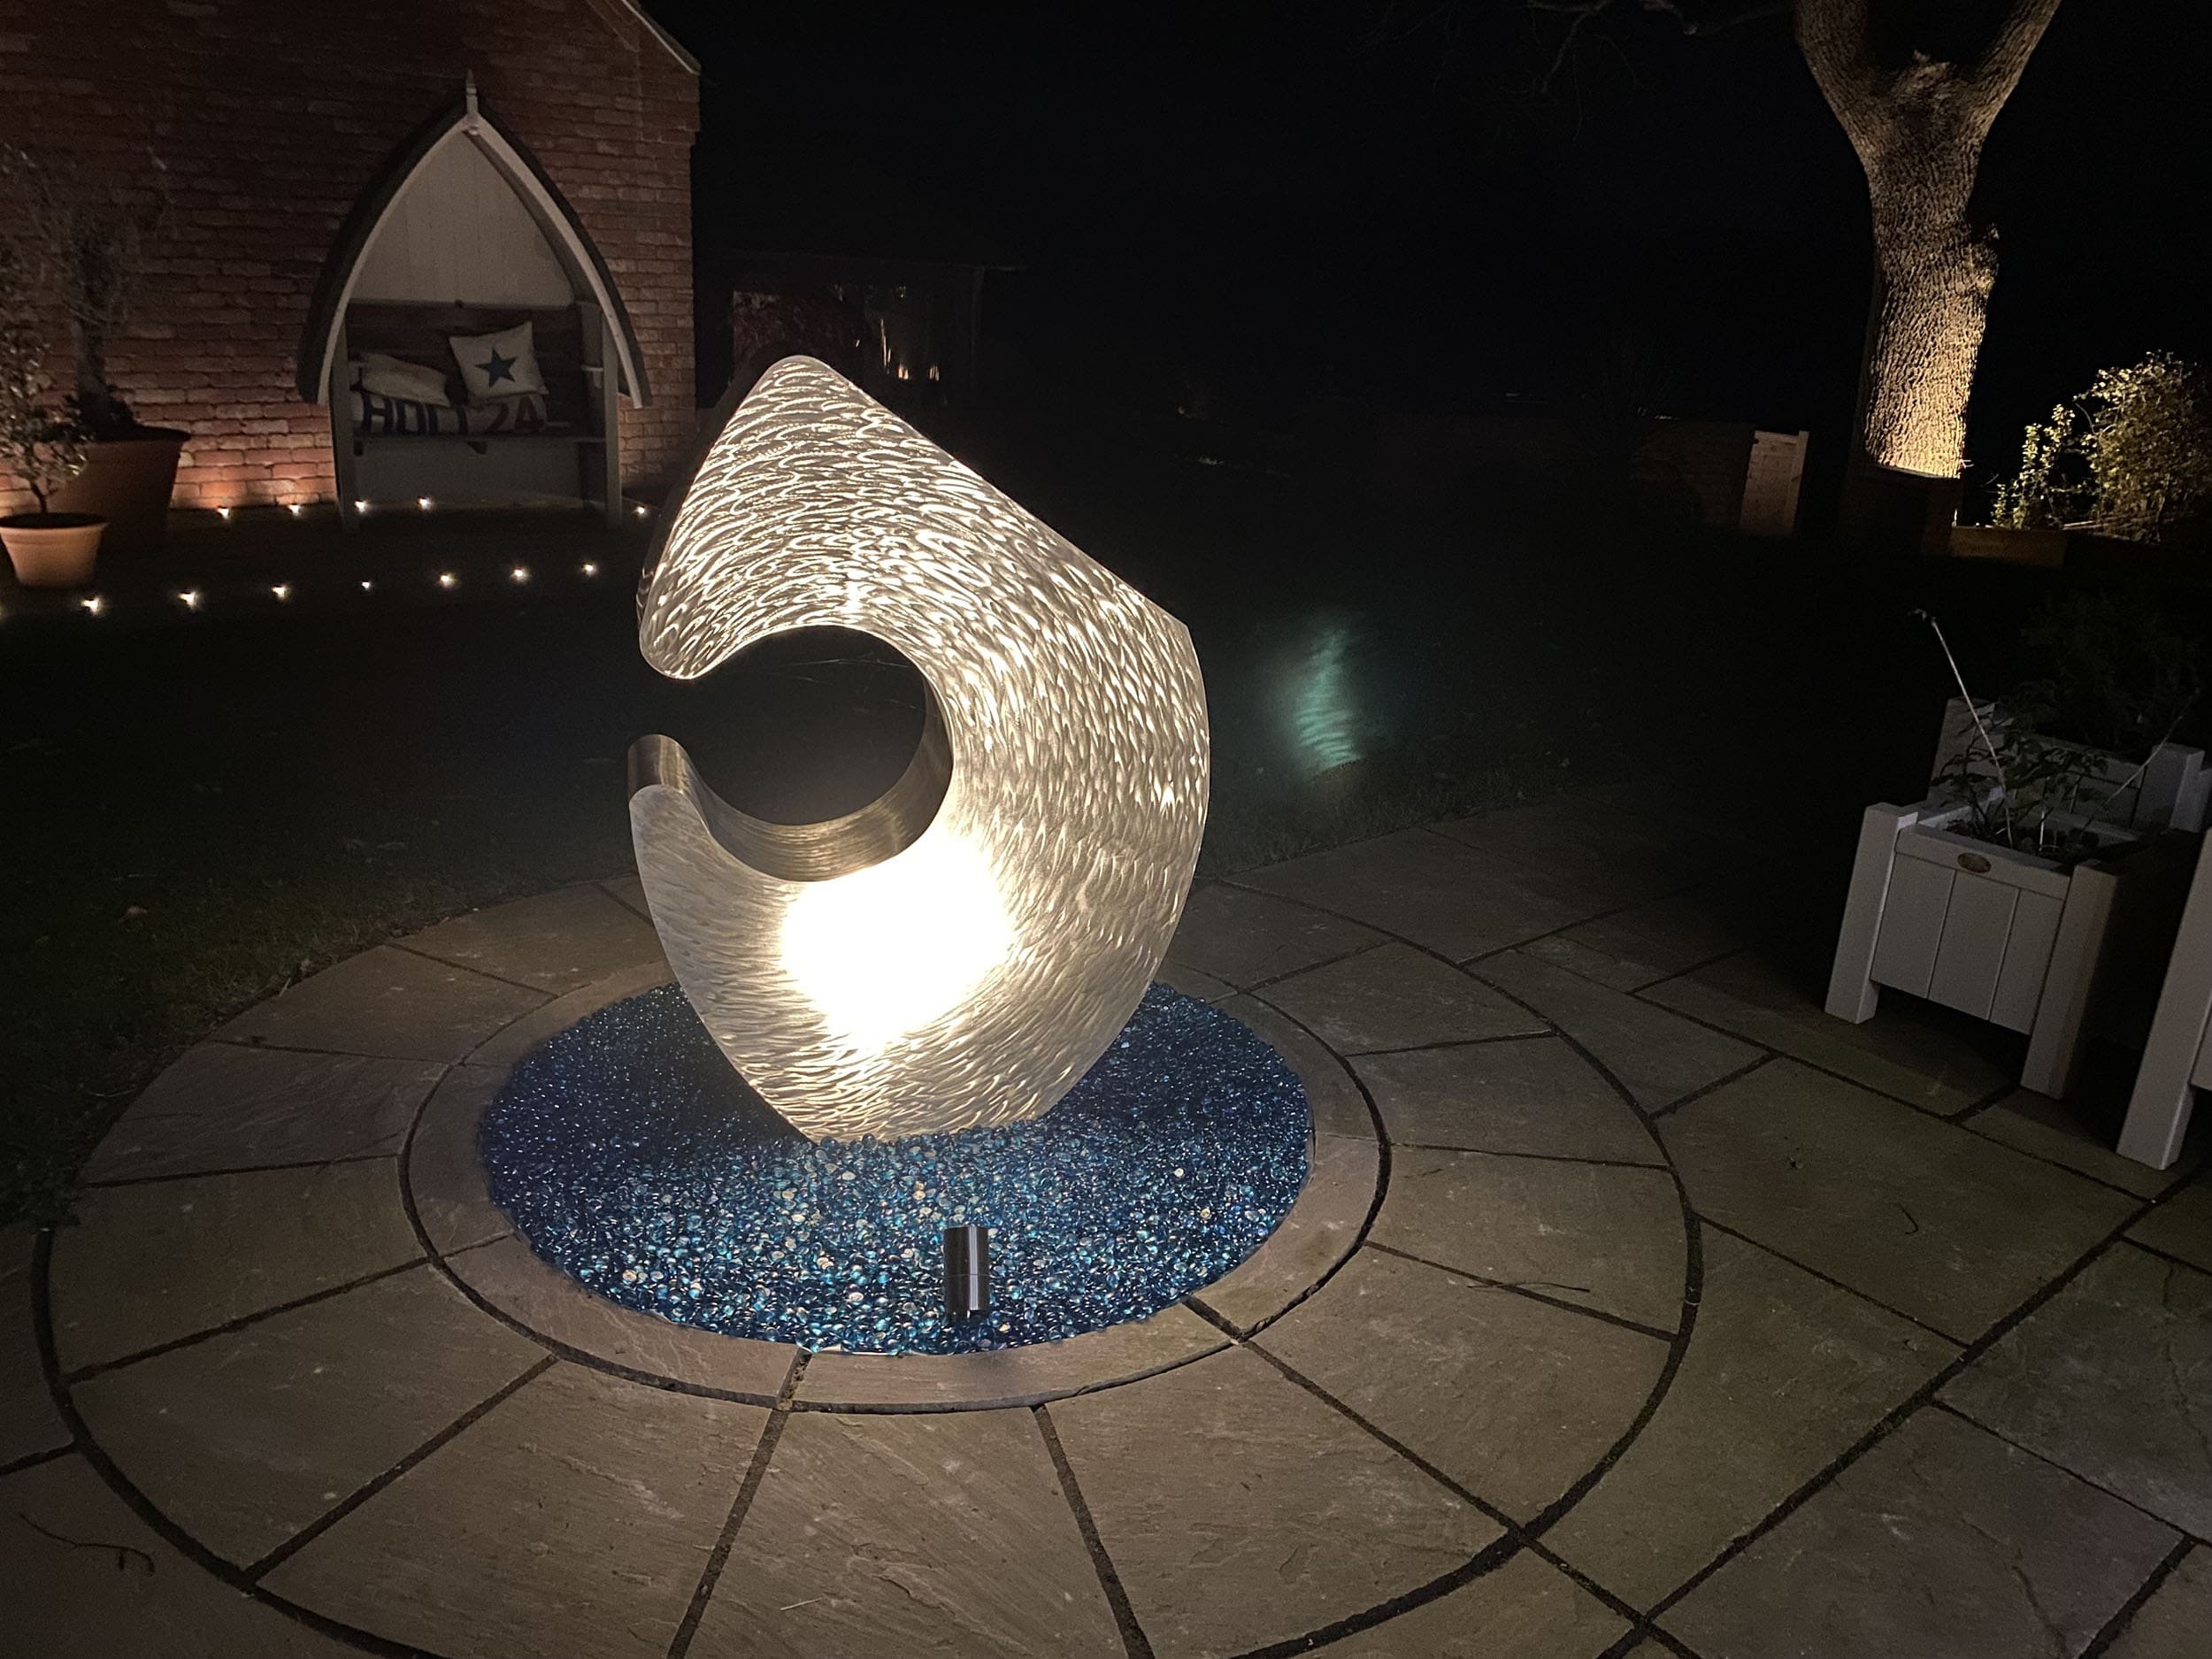 enigma-II-stainless-steel-garden-sculpture-night-2.jpg